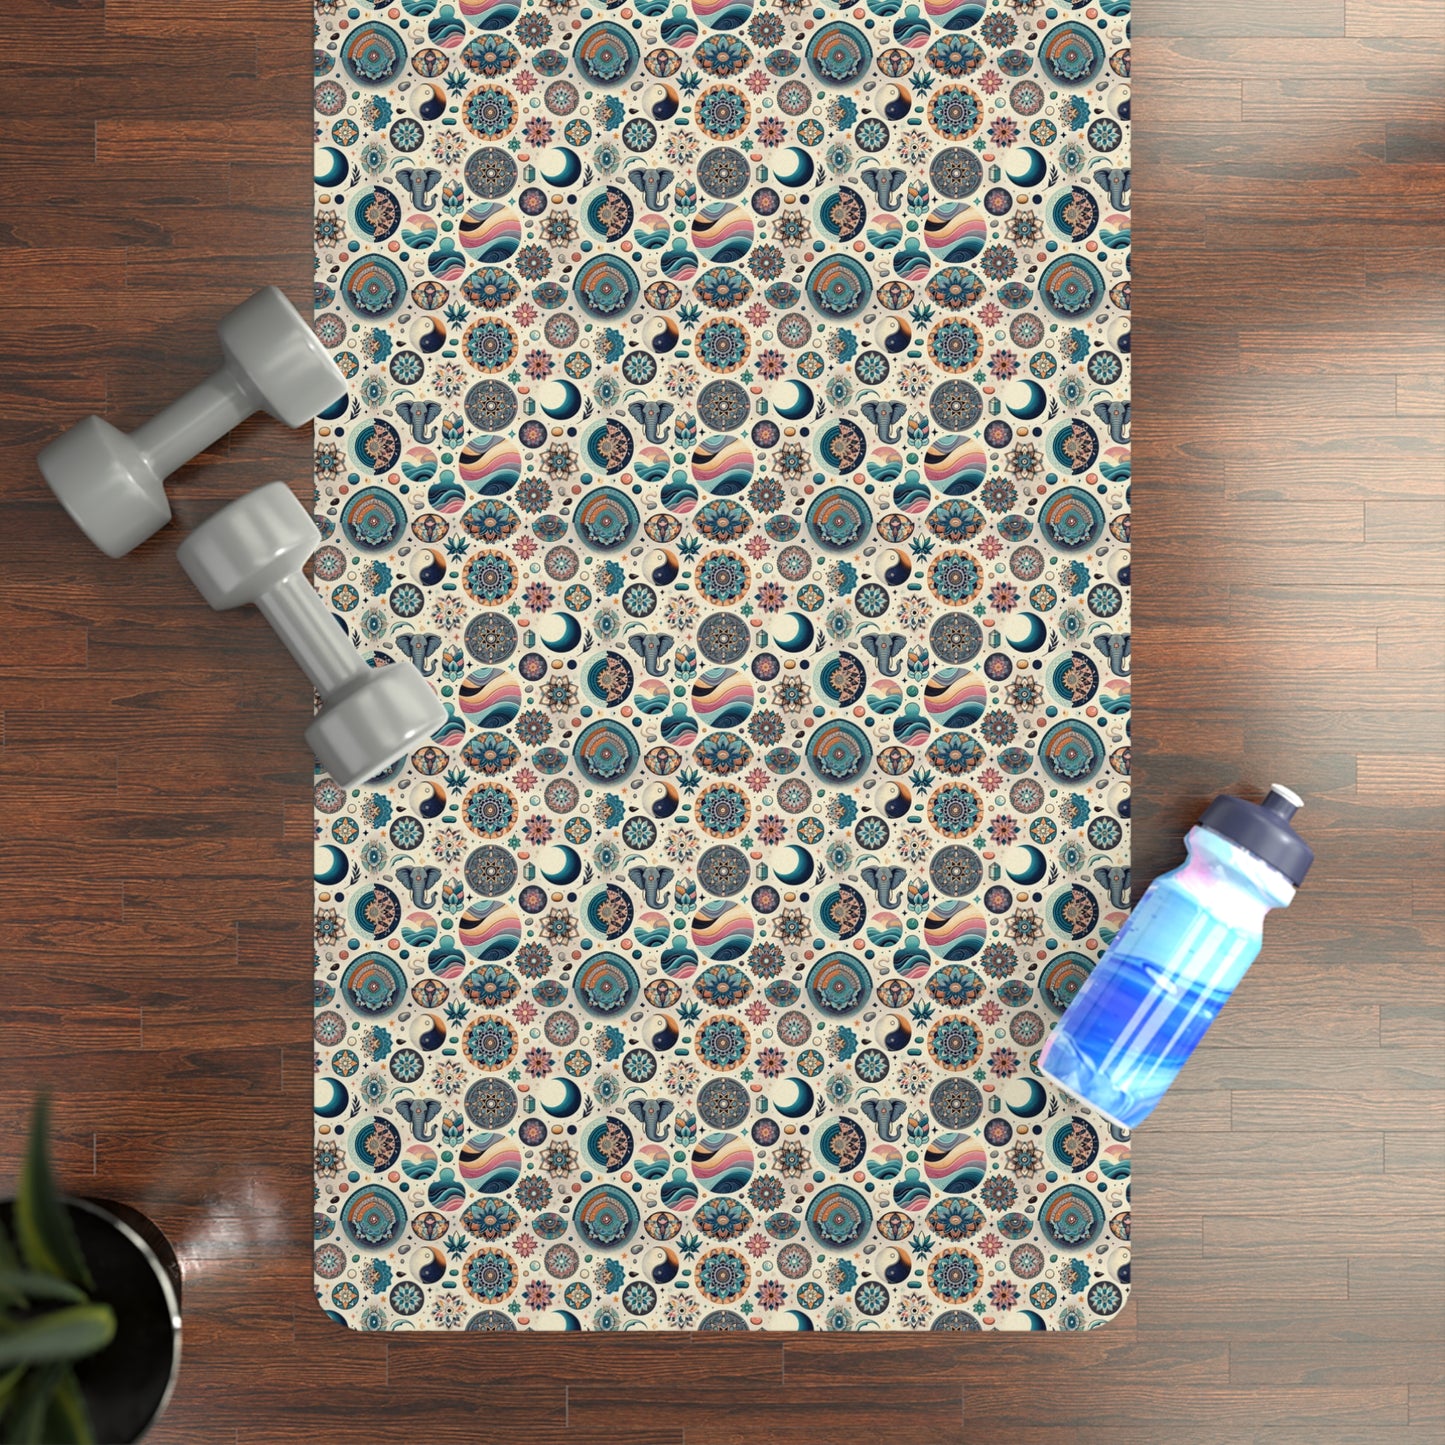 Ultimate Harmony Yoga Mat: Anti-Slip, Comfort Rubber with Vibrant Multi-Pattern Design